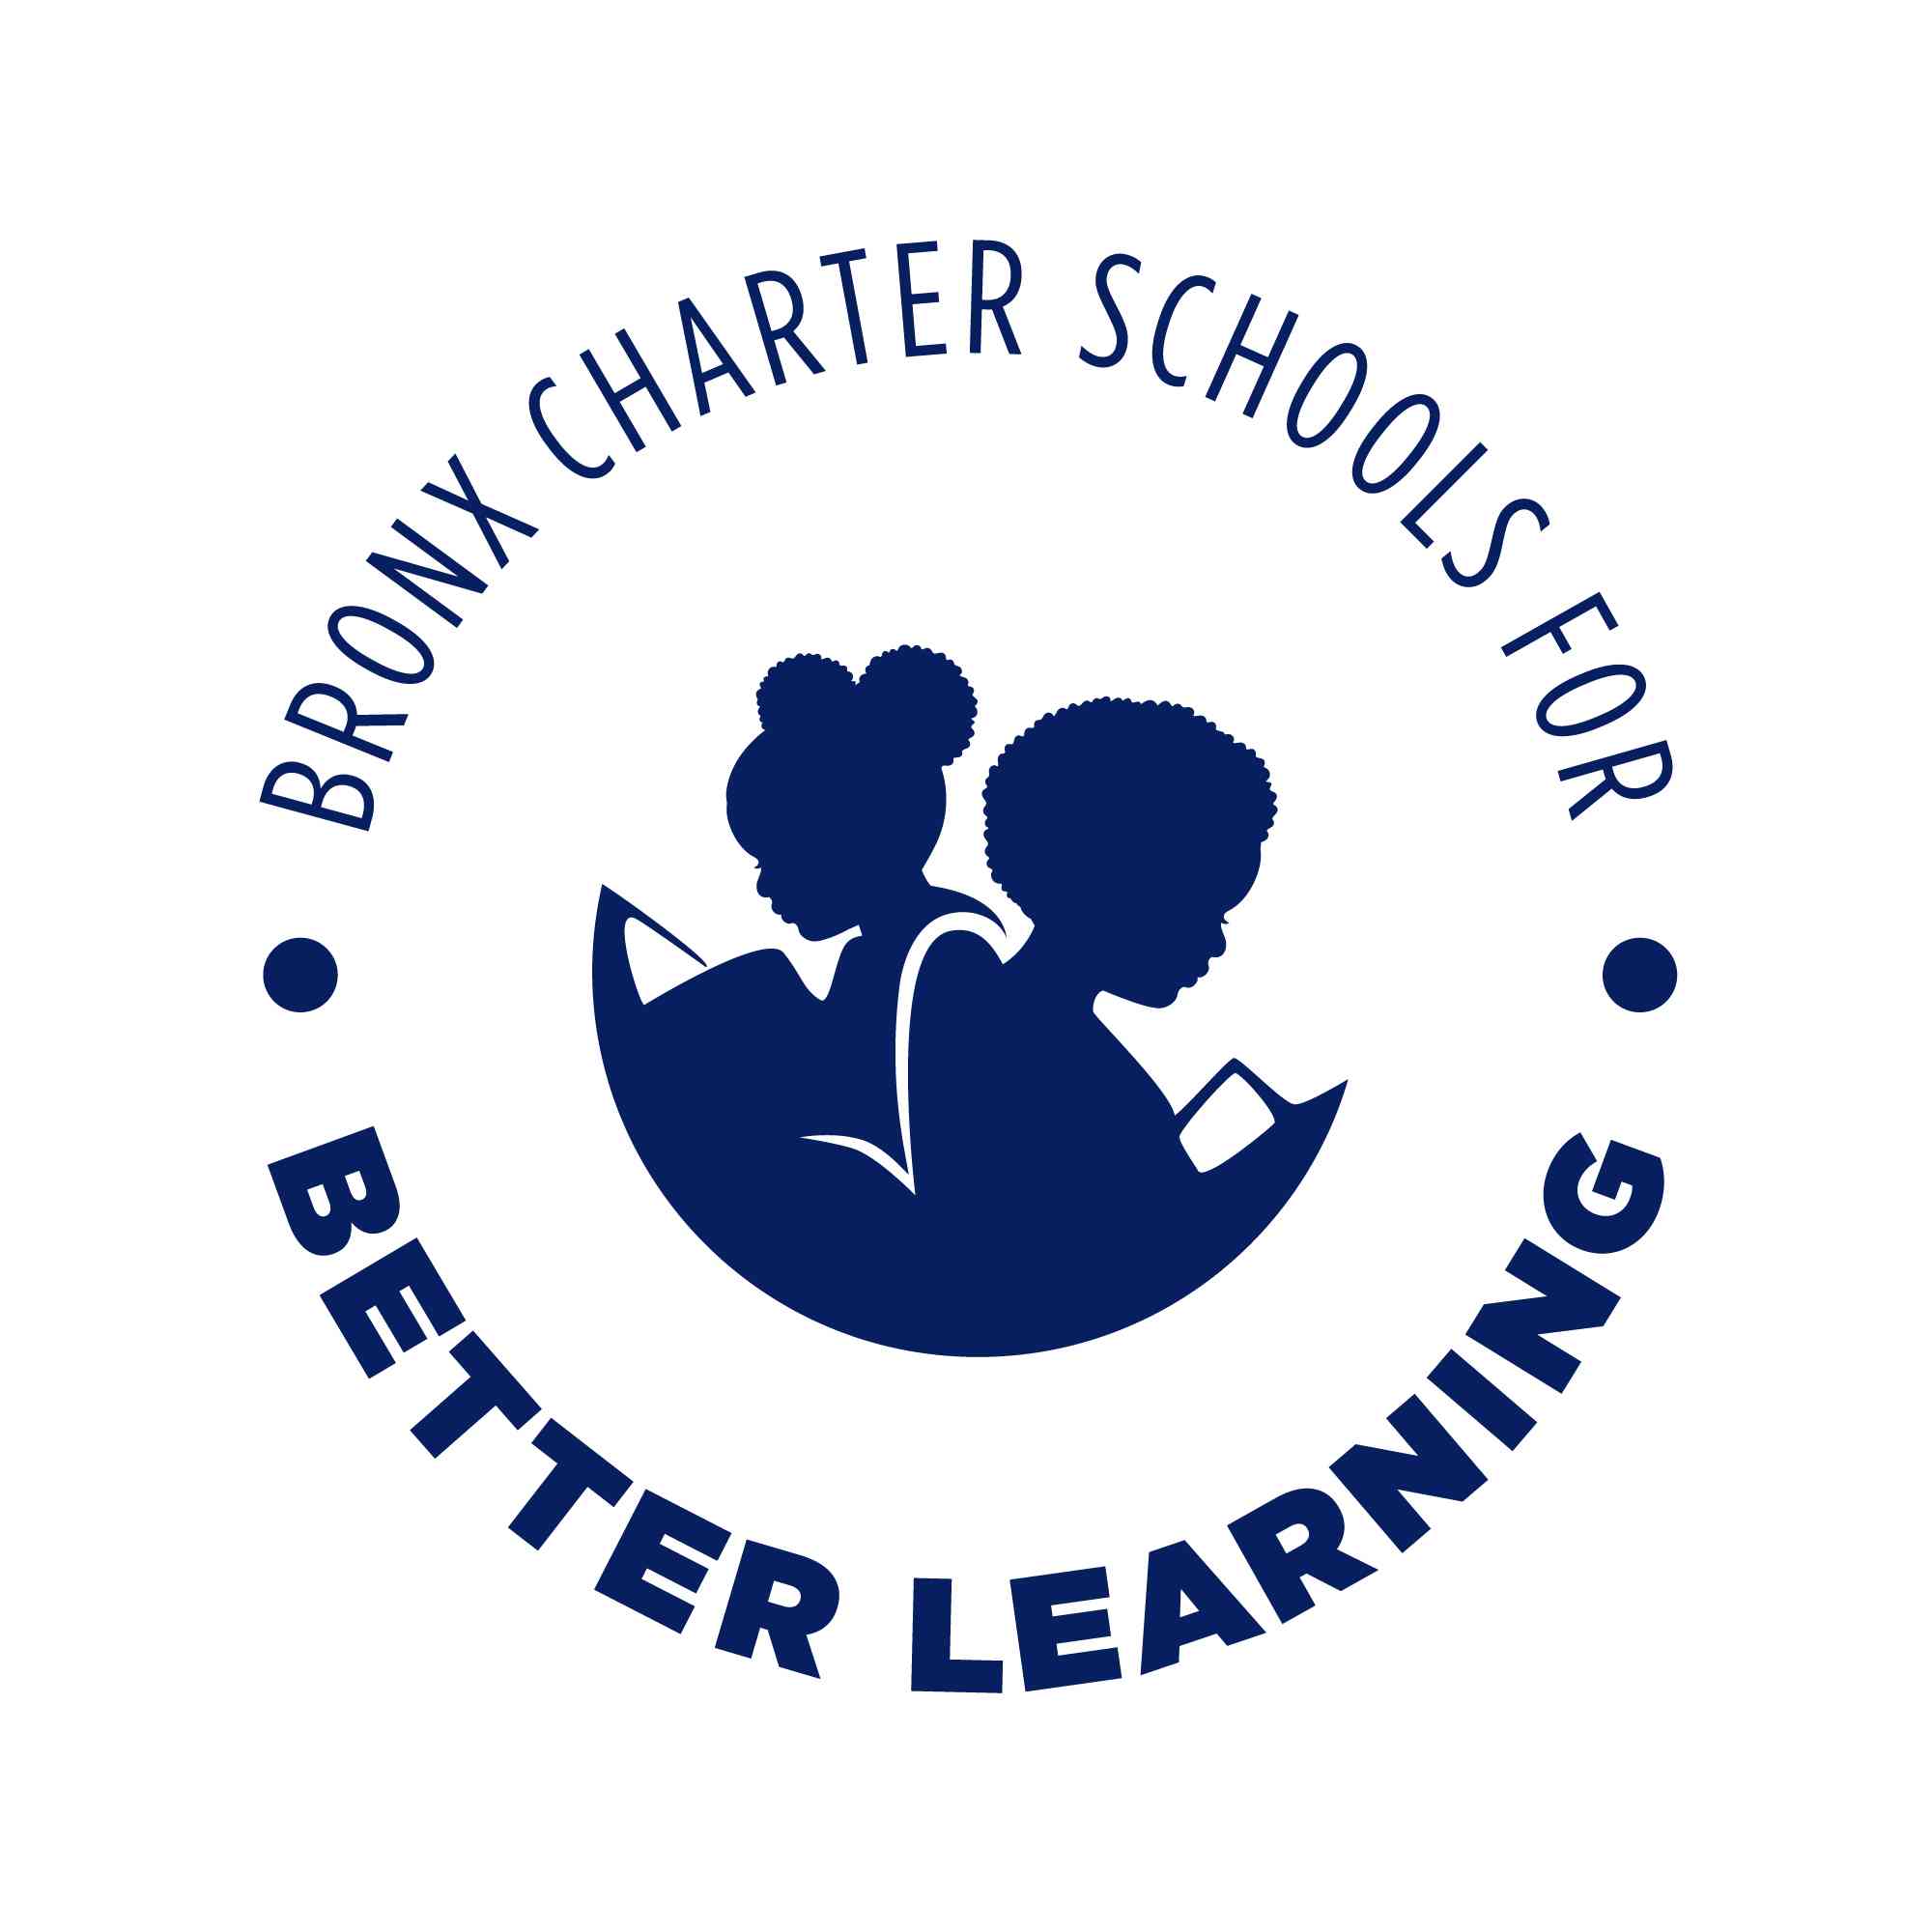 The Bronx Charter School for Better Learning logo